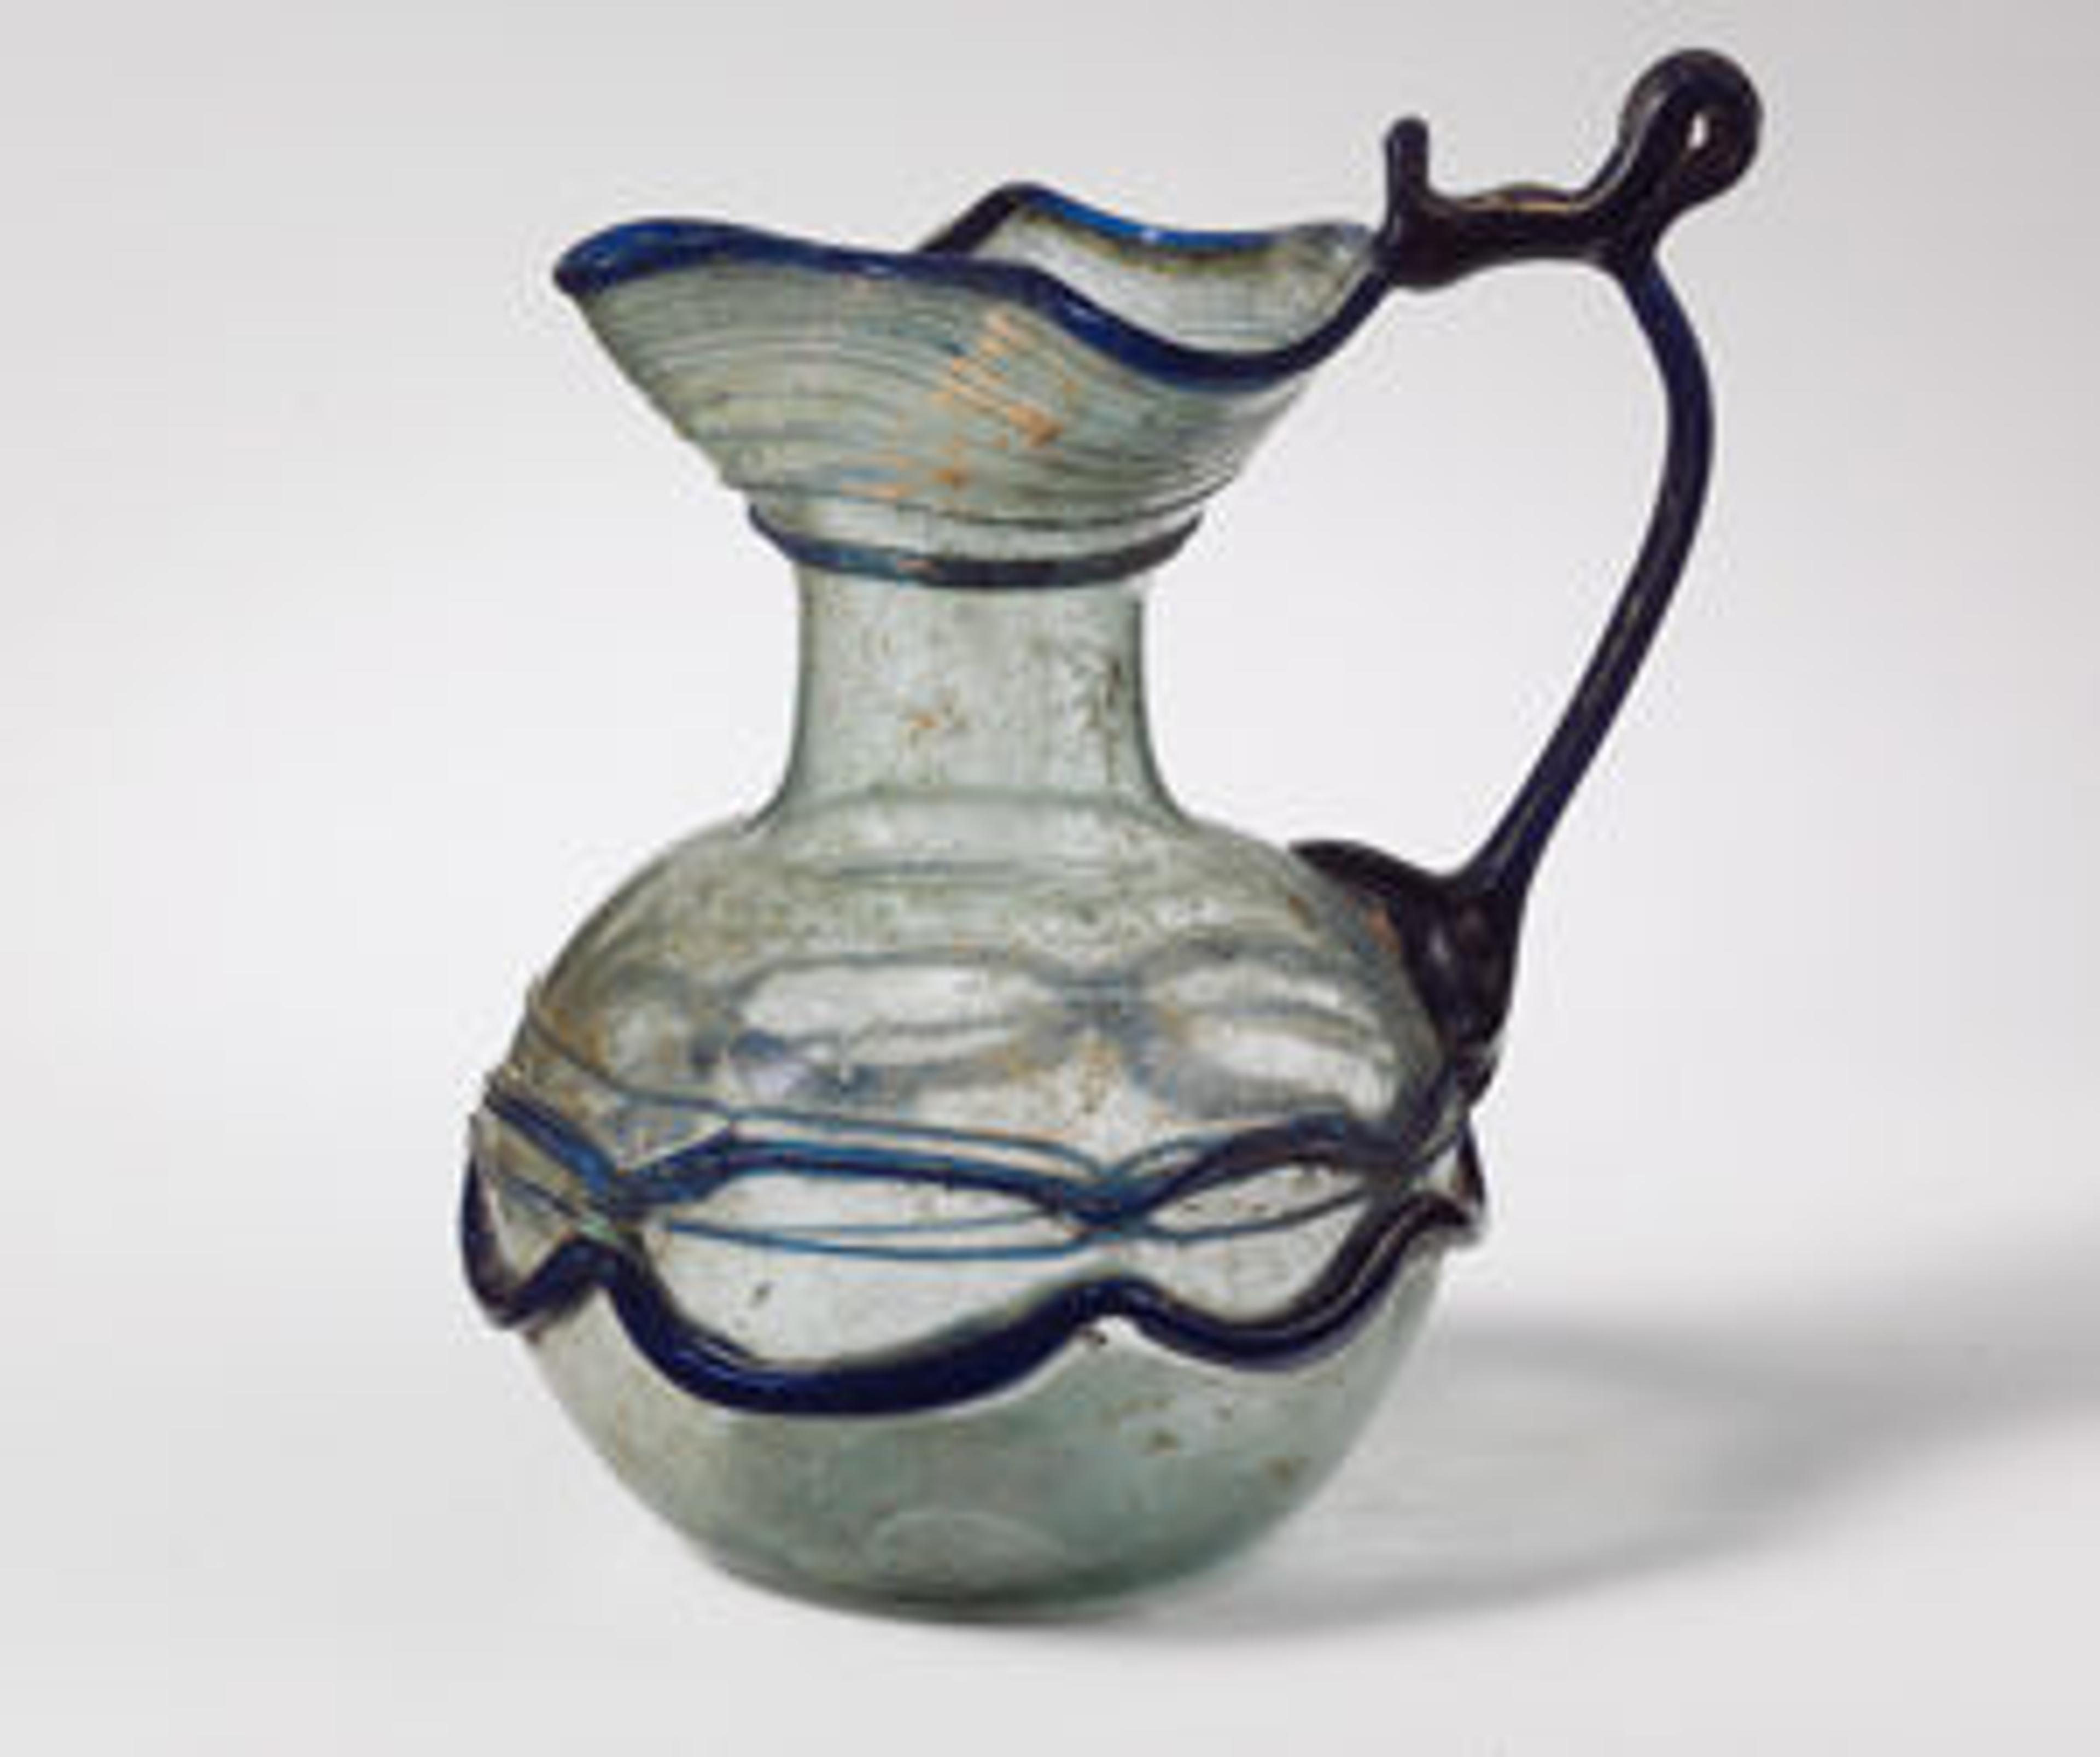 Glass jug with trefoil rim (37.128.6)